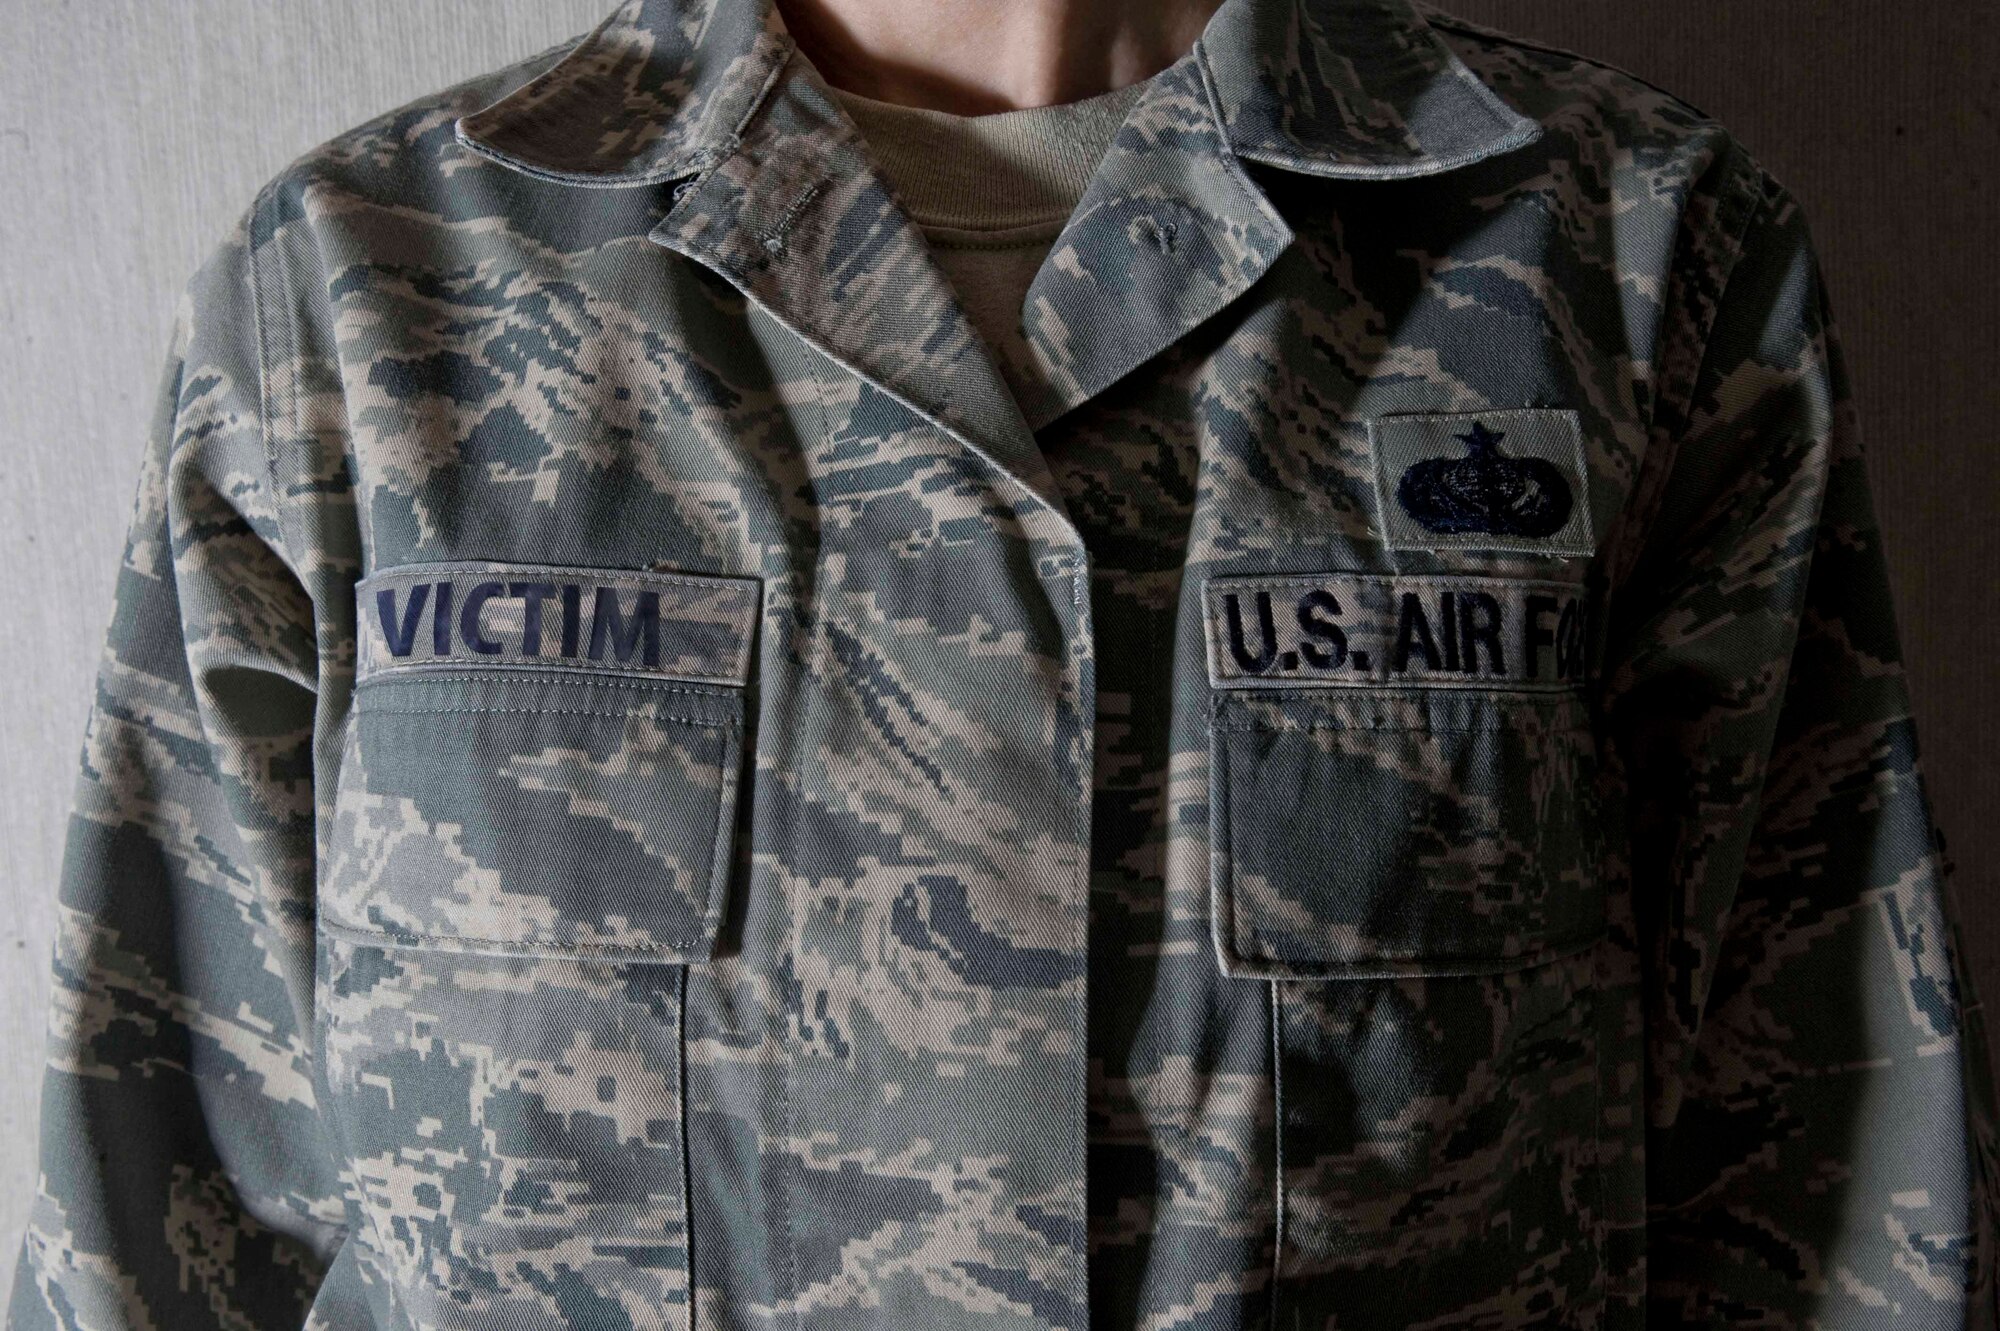 ELLSWORTH AIR FORCE BASE S.D. --  Victims don't wear name tags. (U.S. Air Force photo illustration/Senior Airman Marc I. Lane)